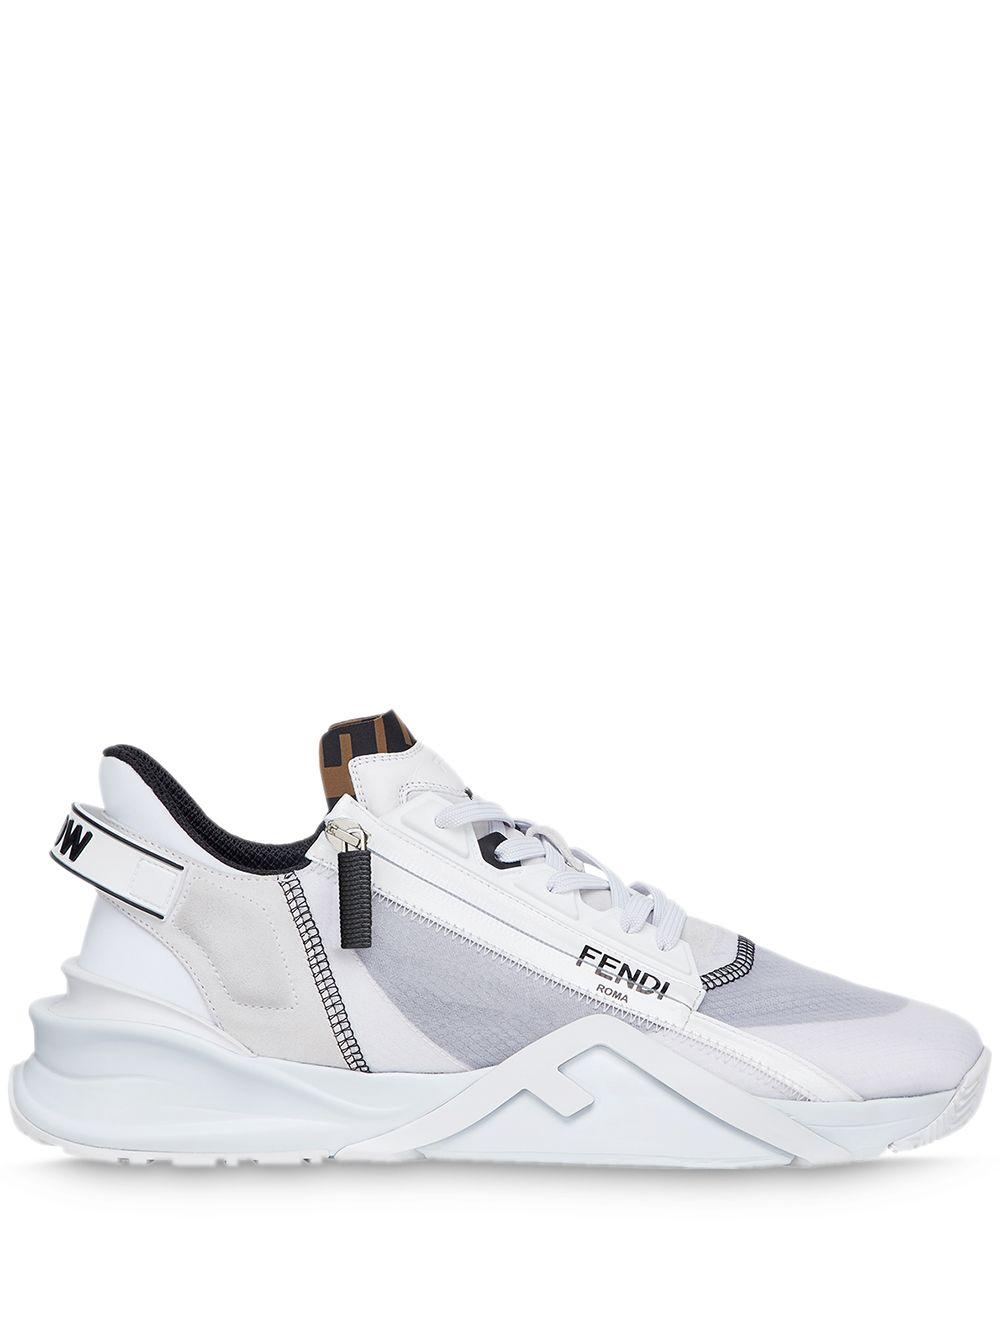 Fendi Zip Running Style Sneakers in White for Men | Lyst